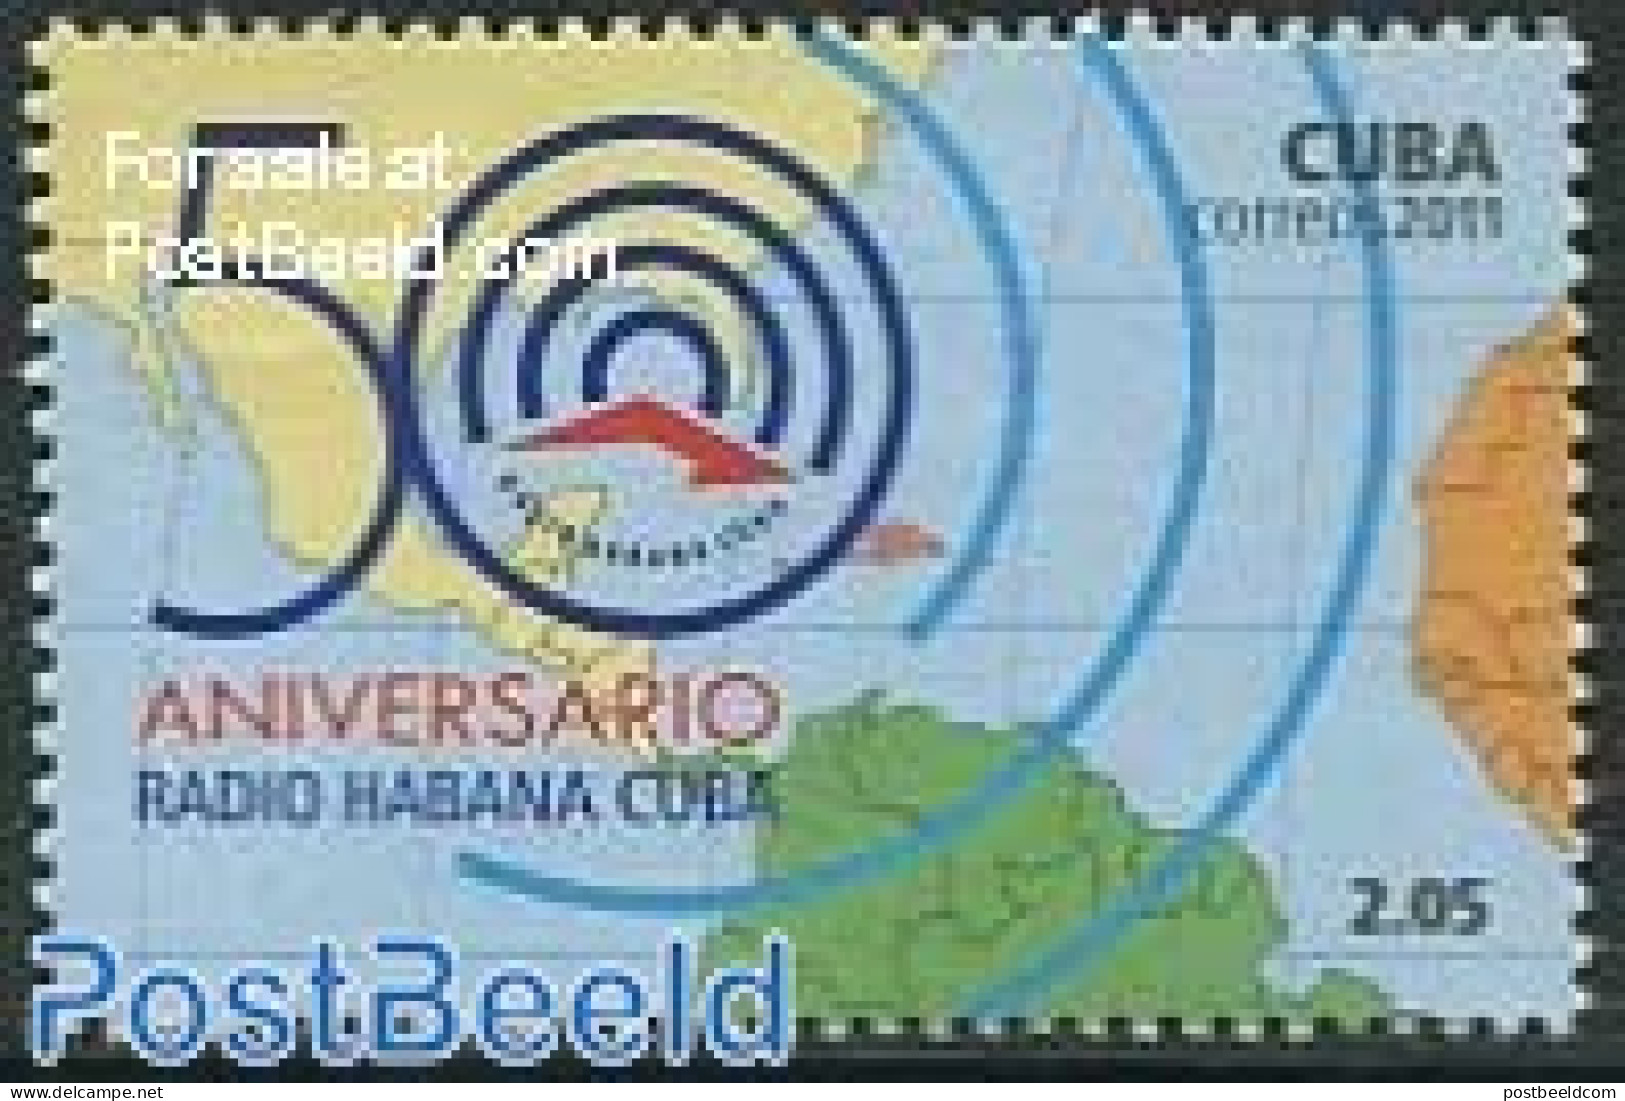 Cuba 2011 50 Years Radio Habana 1v, Mint NH, Performance Art - Various - Radio And Television - Maps - Ungebraucht